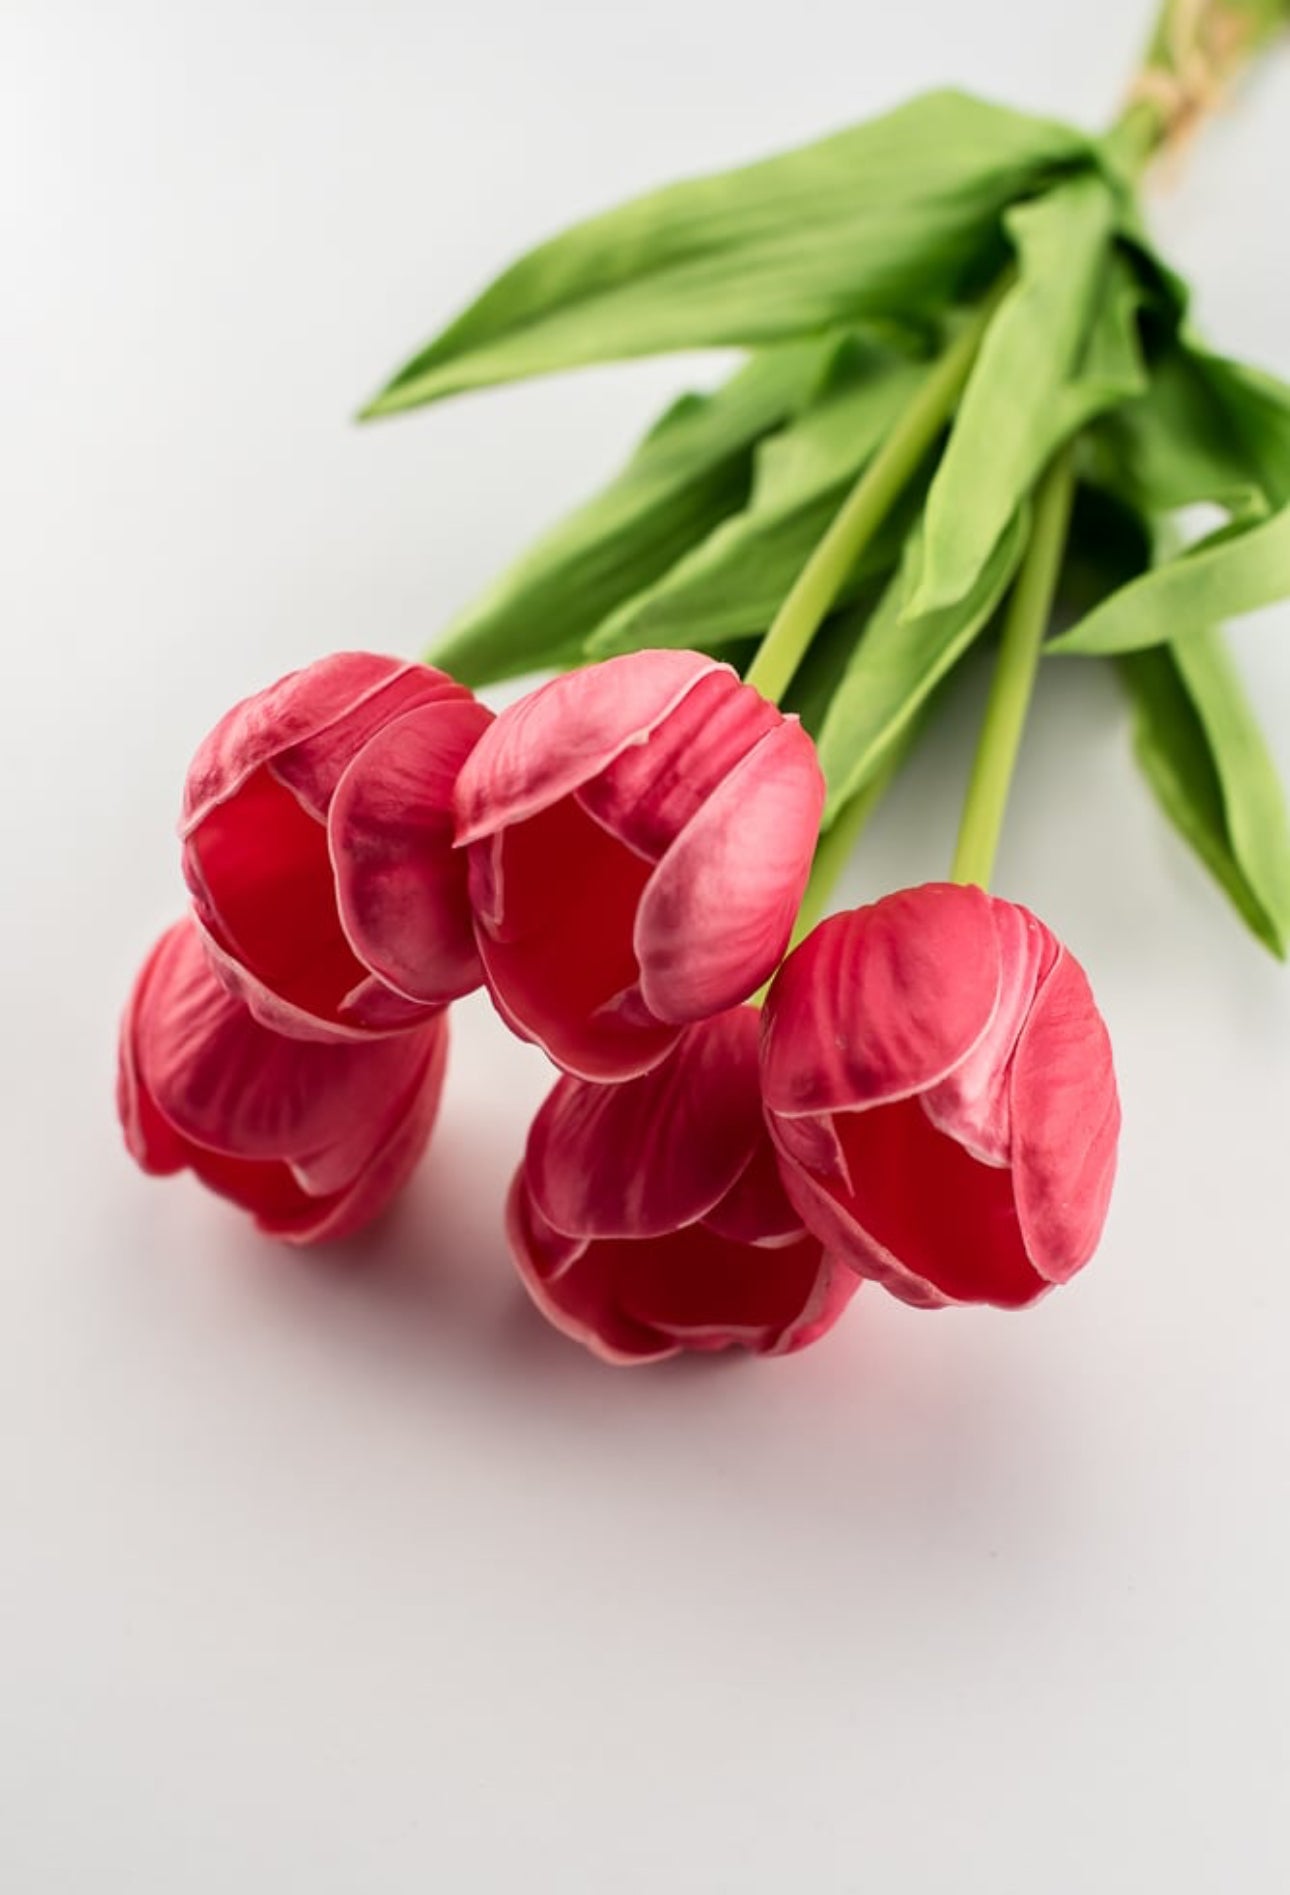 Hot pink, soft touch, life like tulip bundle - Greenery Market2260018HP